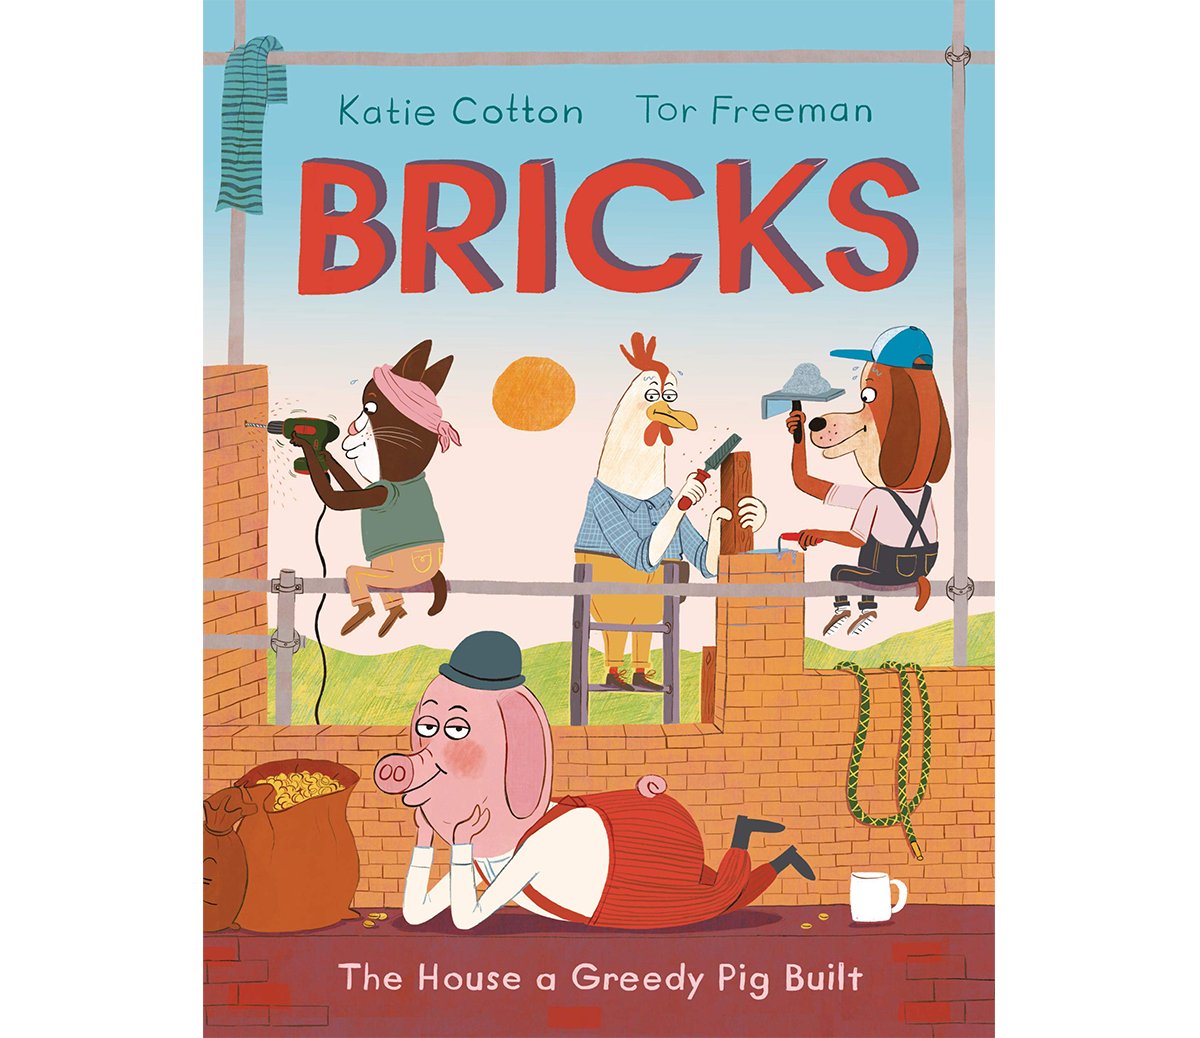 tor-freeman-bricks-cover-illustration.jpg